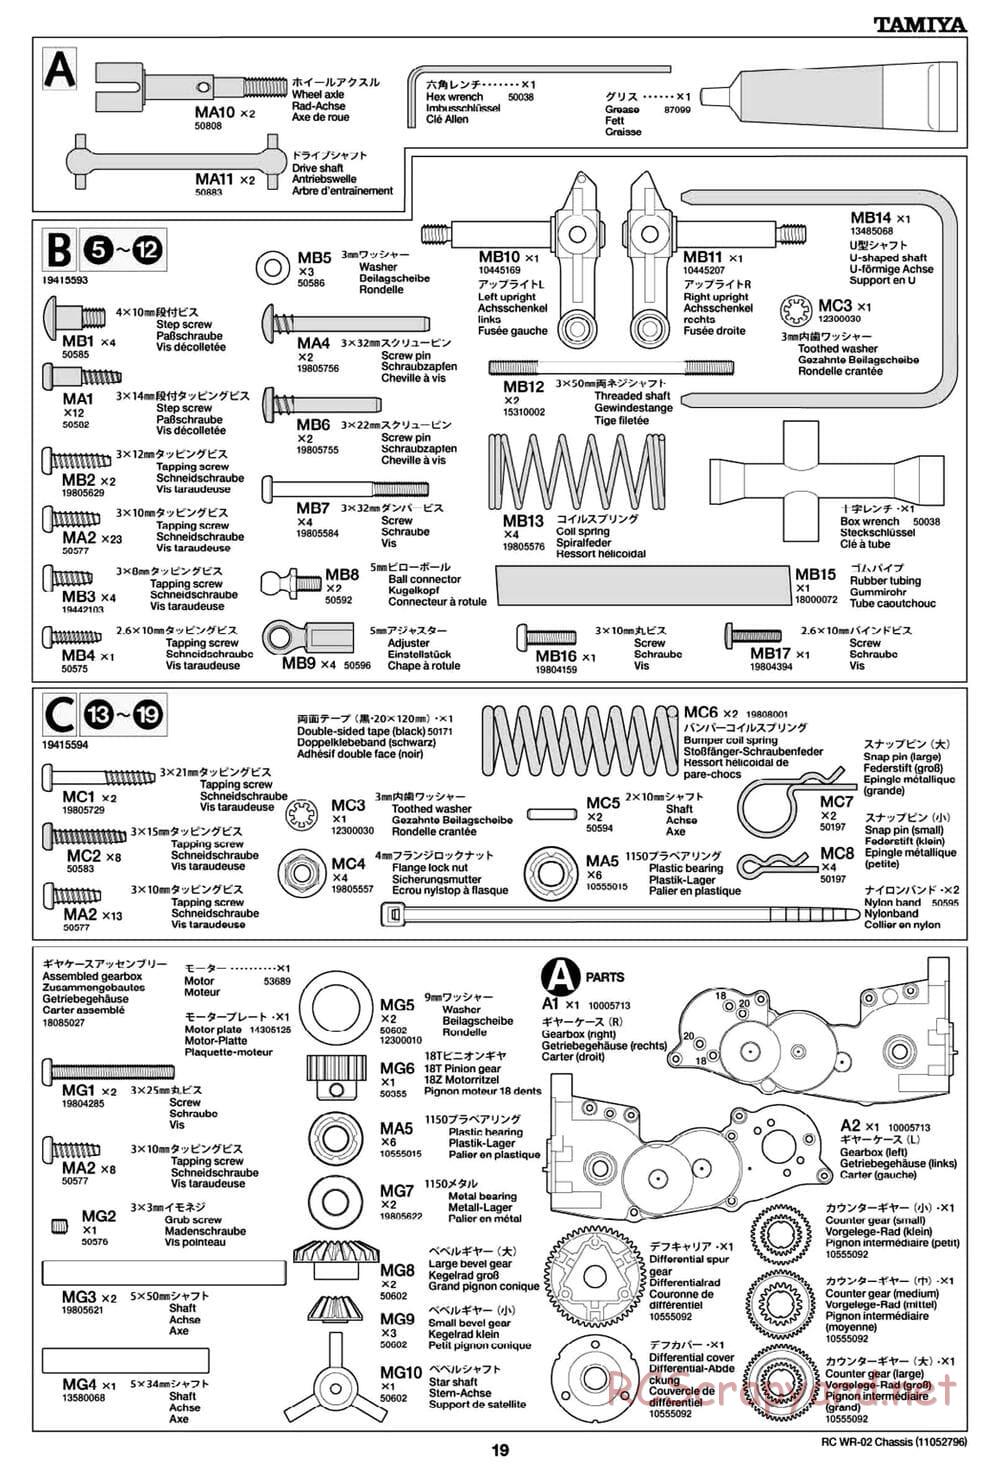 Tamiya - WR-02 Chassis - Manual - Page 19